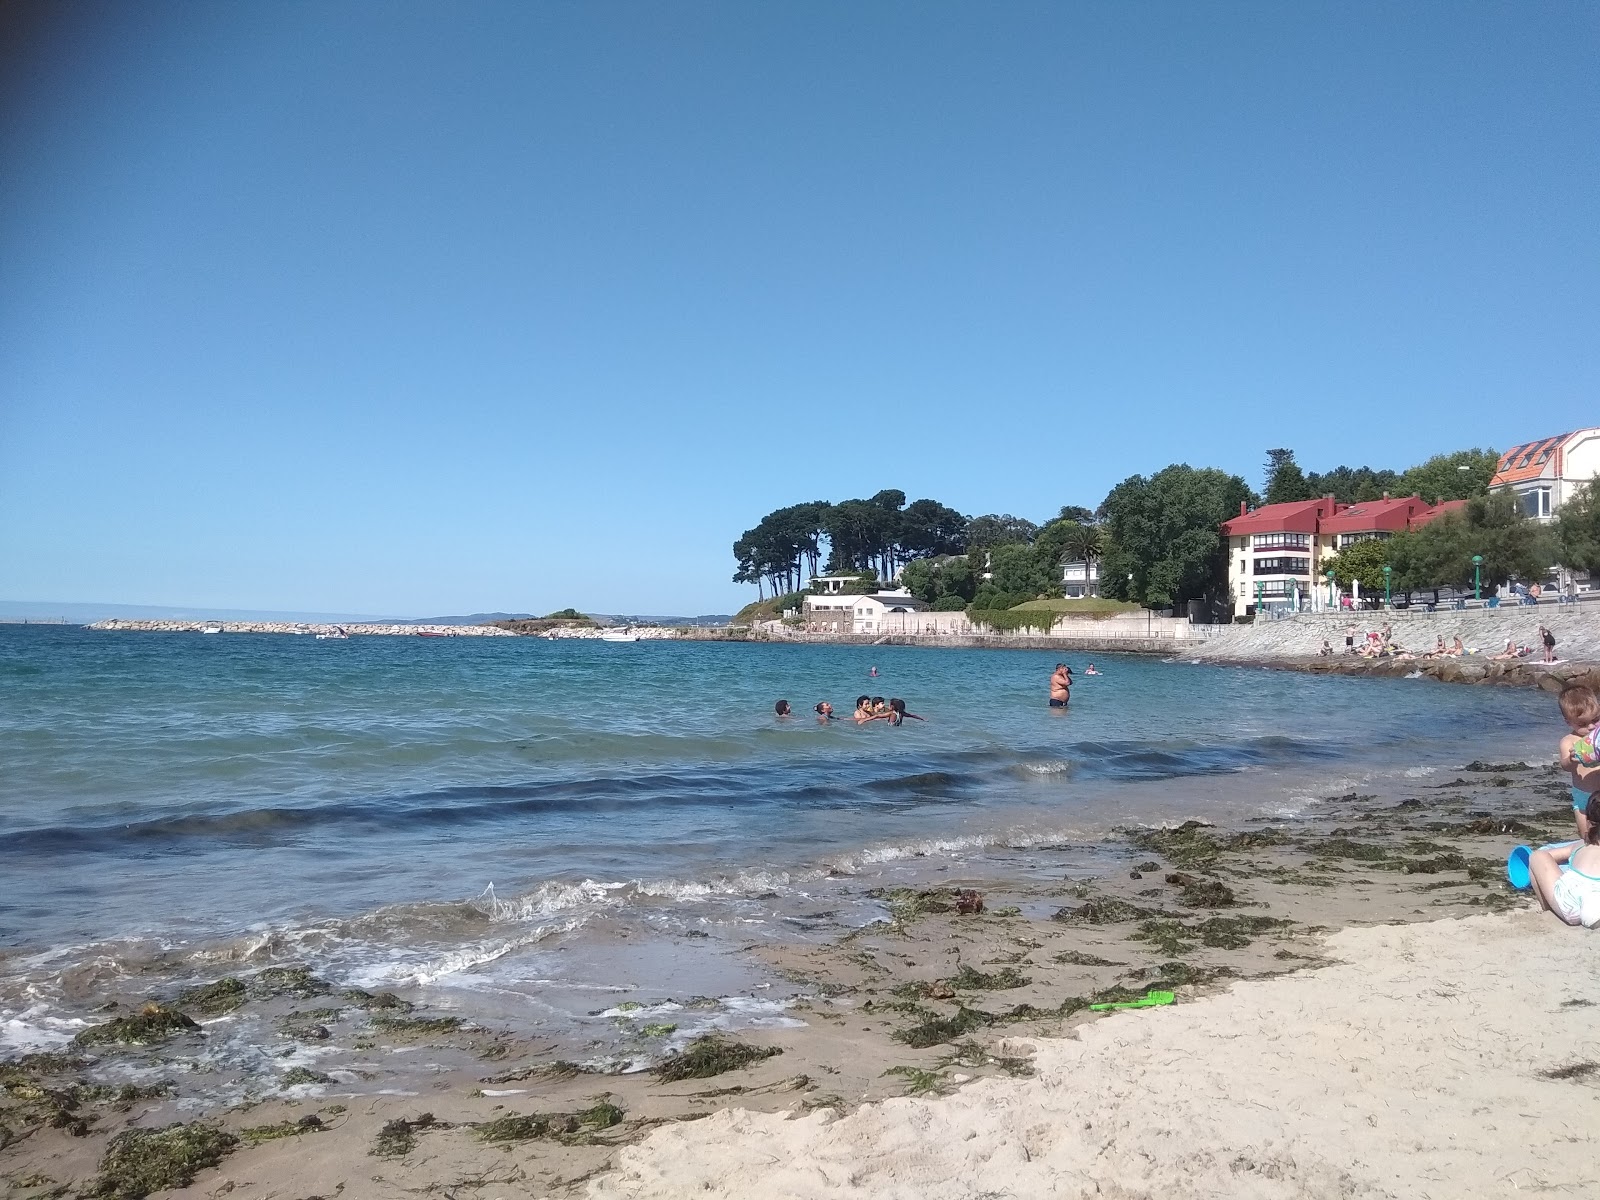 Foto de St.Cristina Beach - lugar popular entre los conocedores del relax